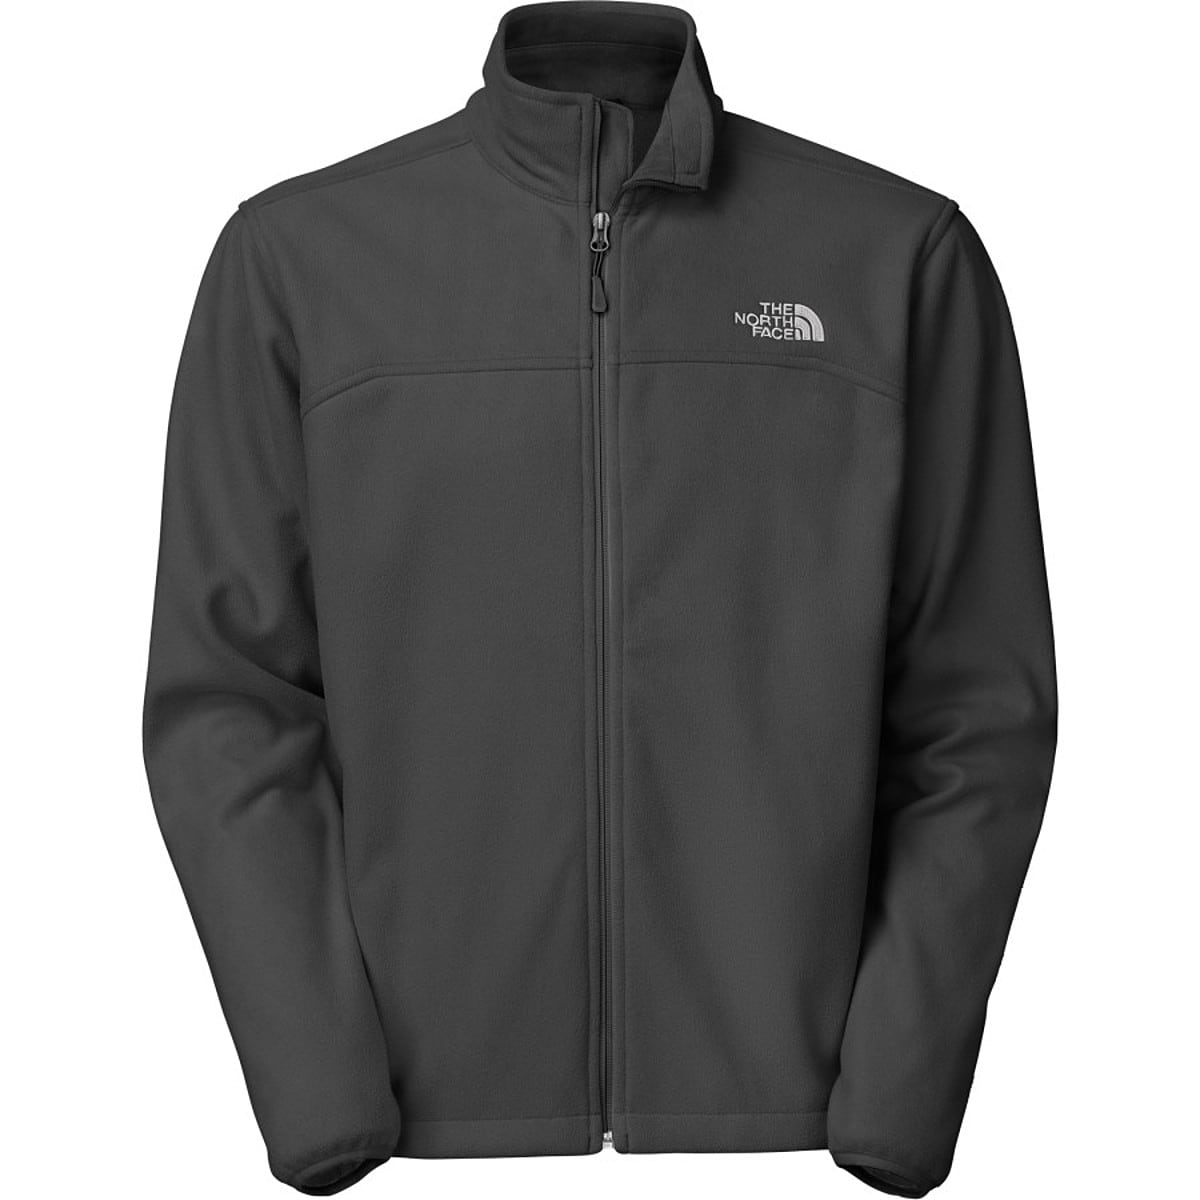 The North Face WindWall 1 Fleece Jacket - Men's - Clothing